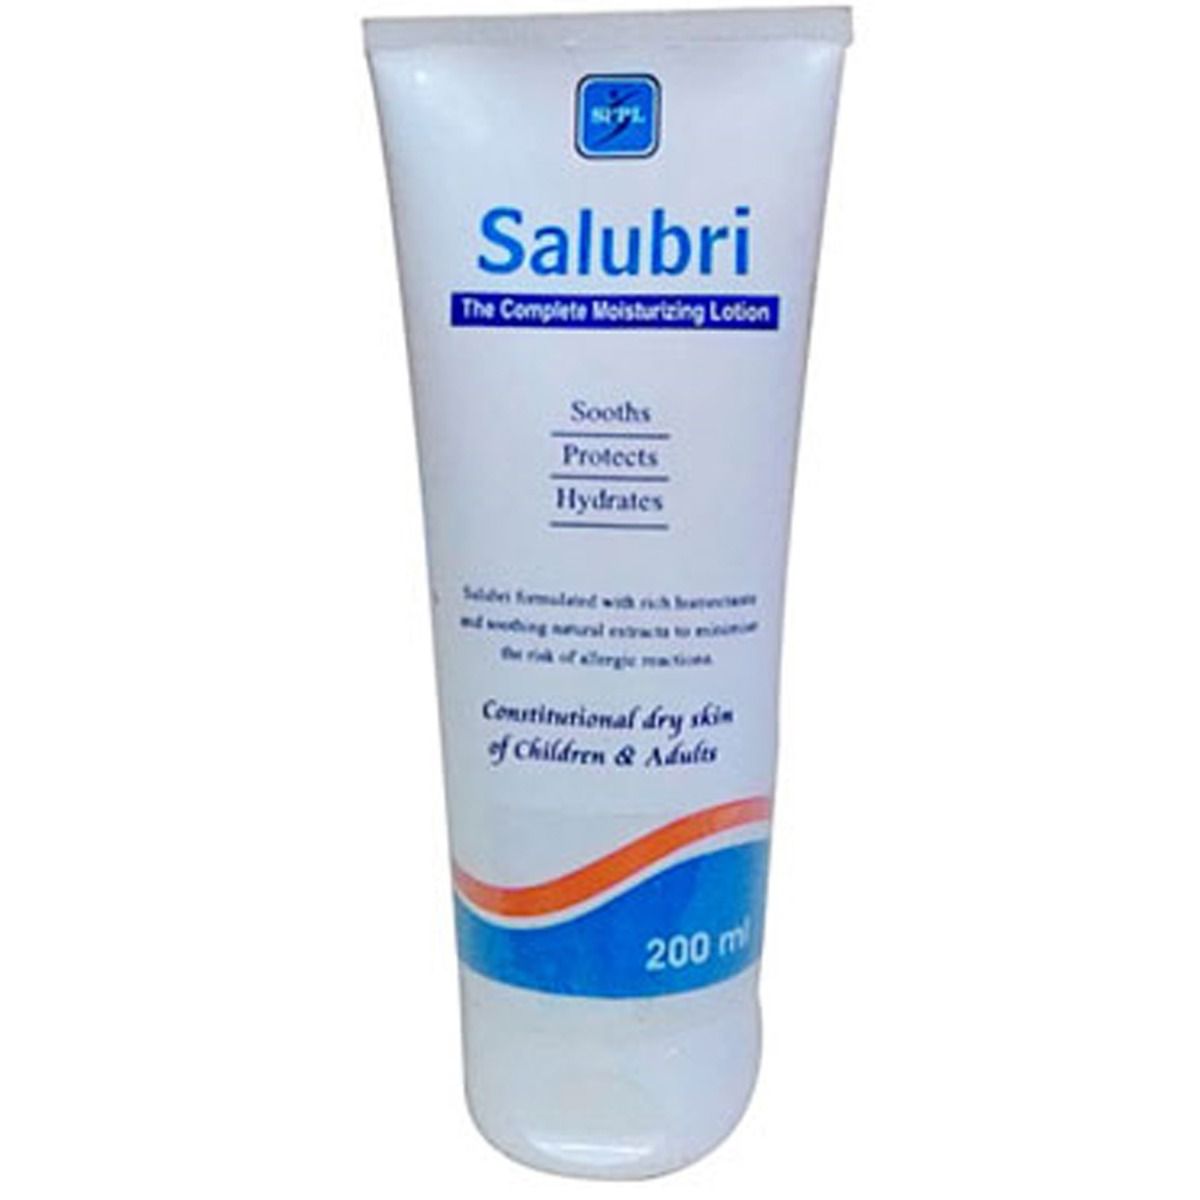 Buy Salubri Moisturizing Lotion, 200 ml Online